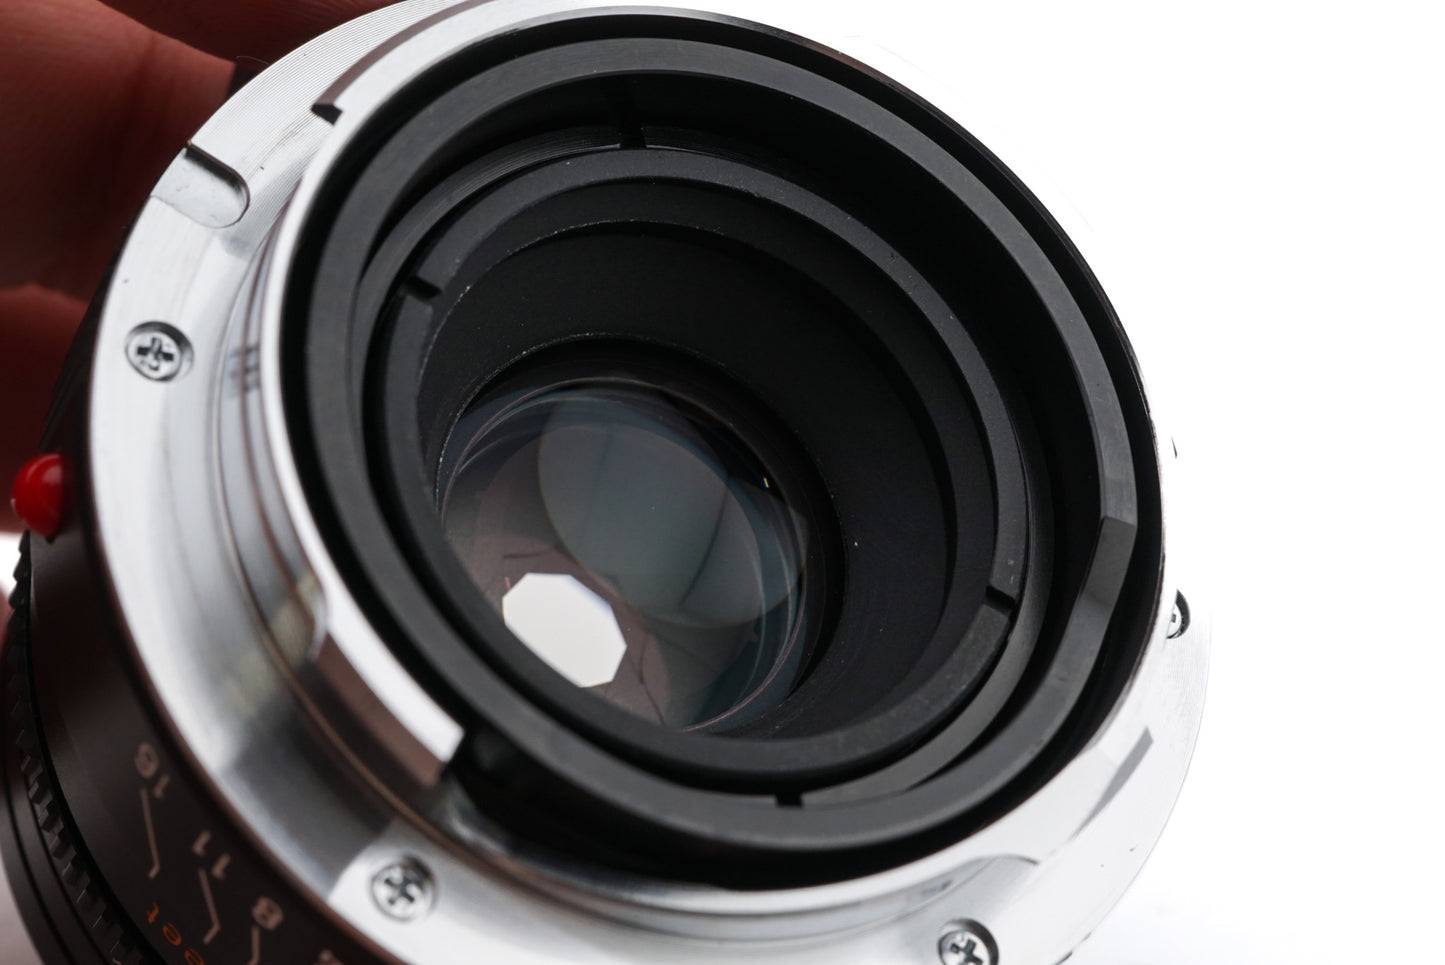 Leica 35mm f2.5 Summarit-M (11643)